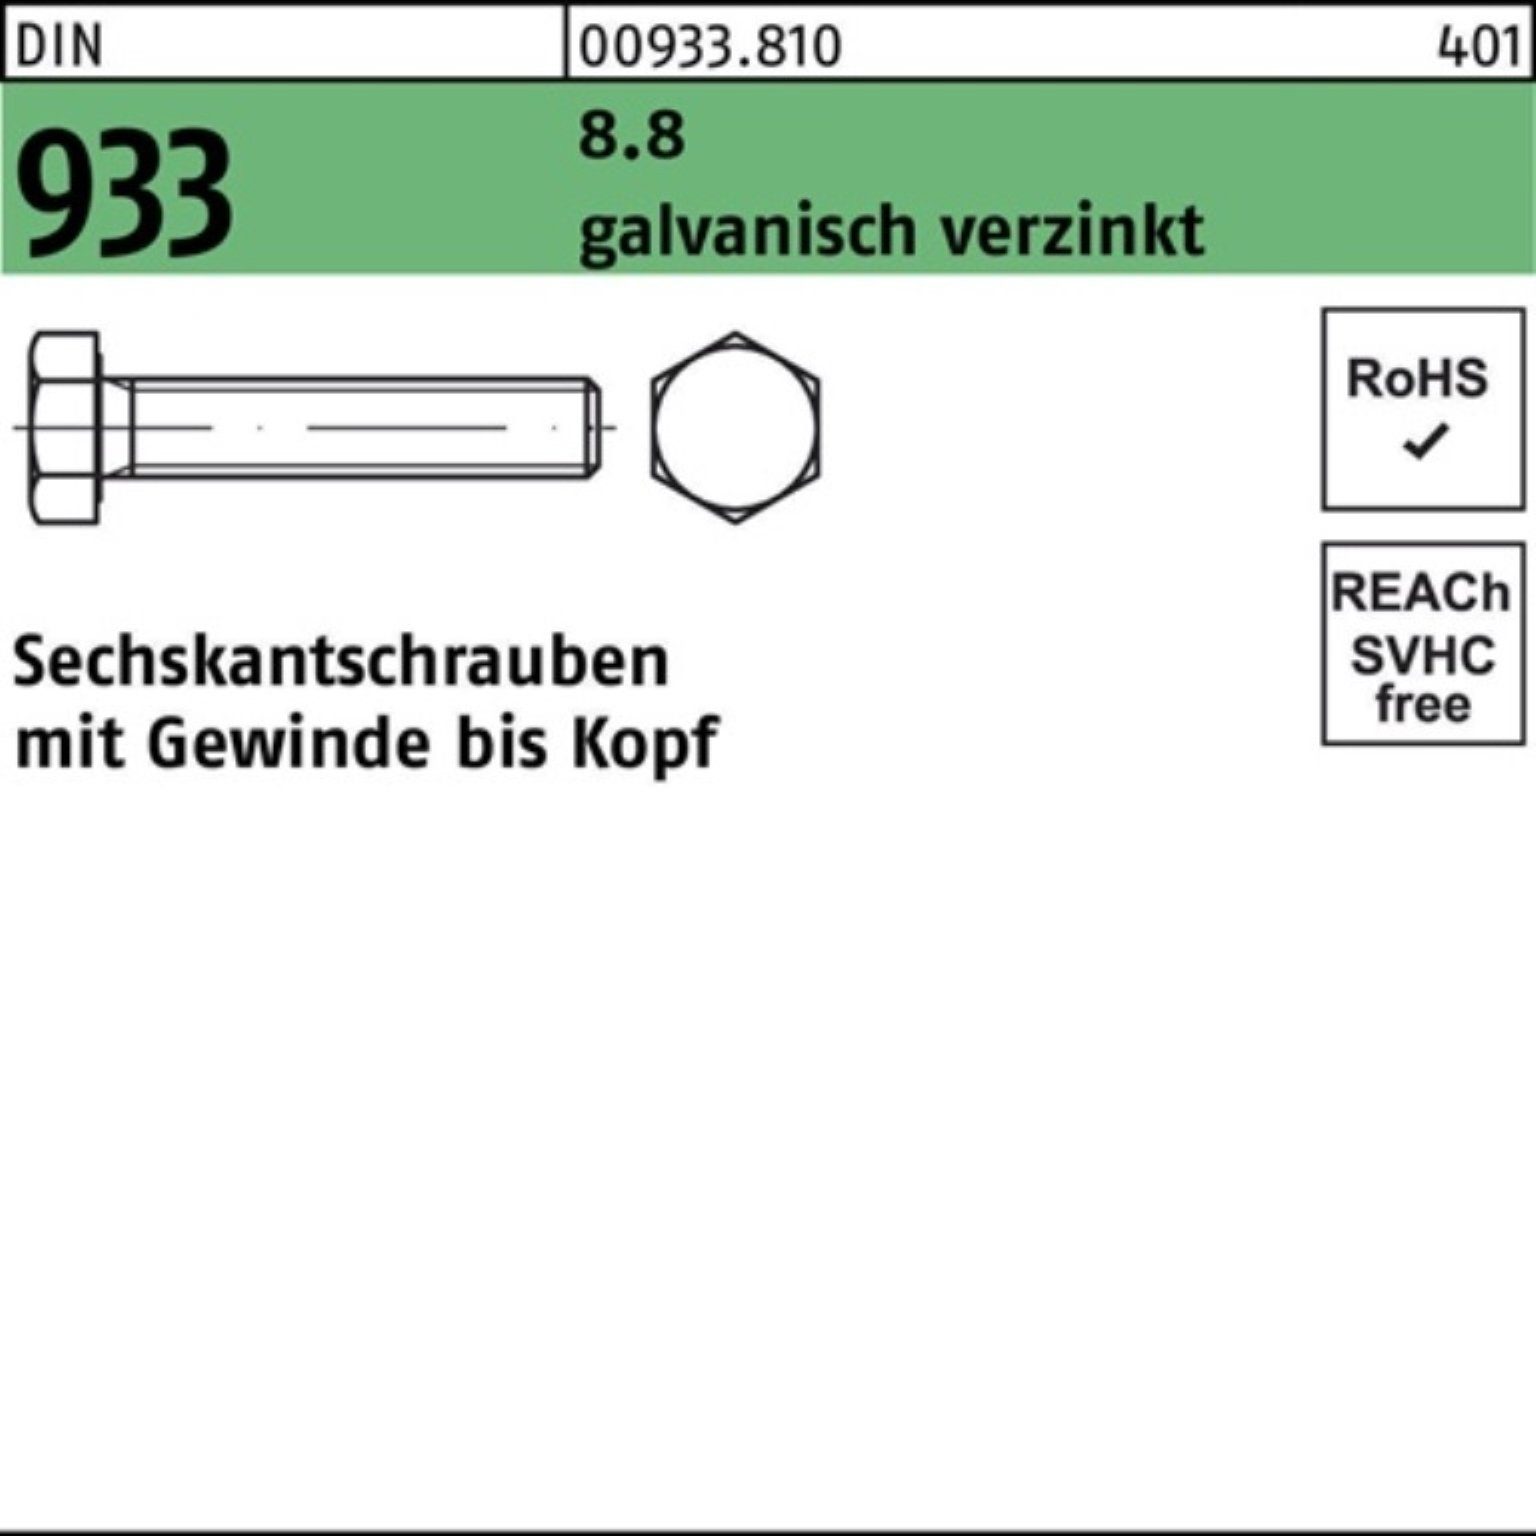 galv.verz. 60 8.8 Stüc VG Reyher Sechskantschraube DIN 100er Sechskantschraube Pack 933 1 M30x